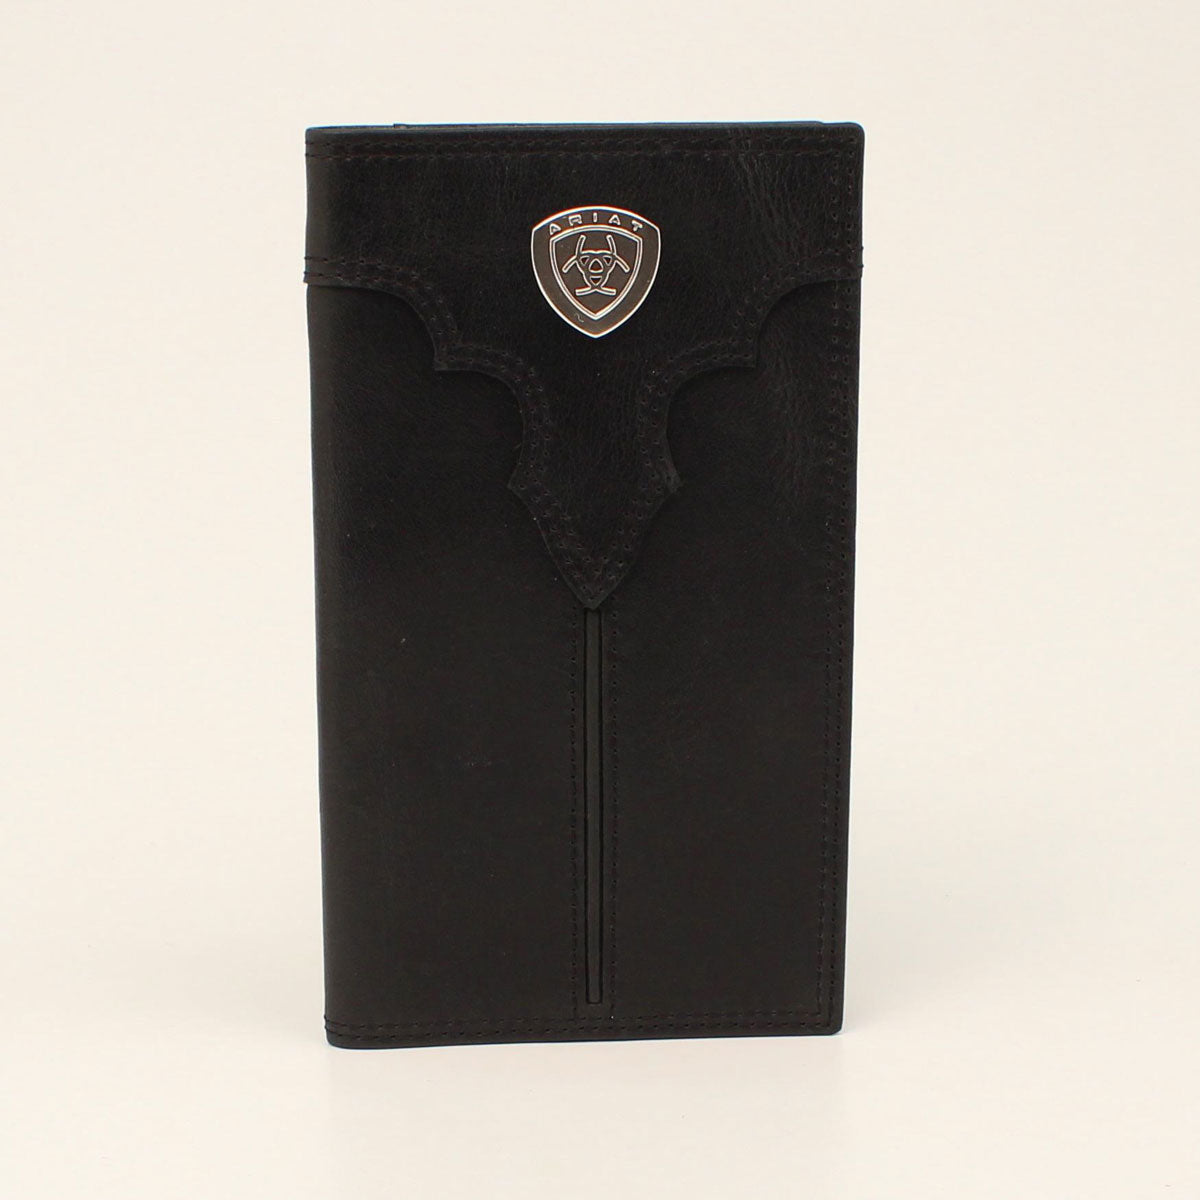 ARIAT Men's Rodeo Wallet Center Bump Shield in Black